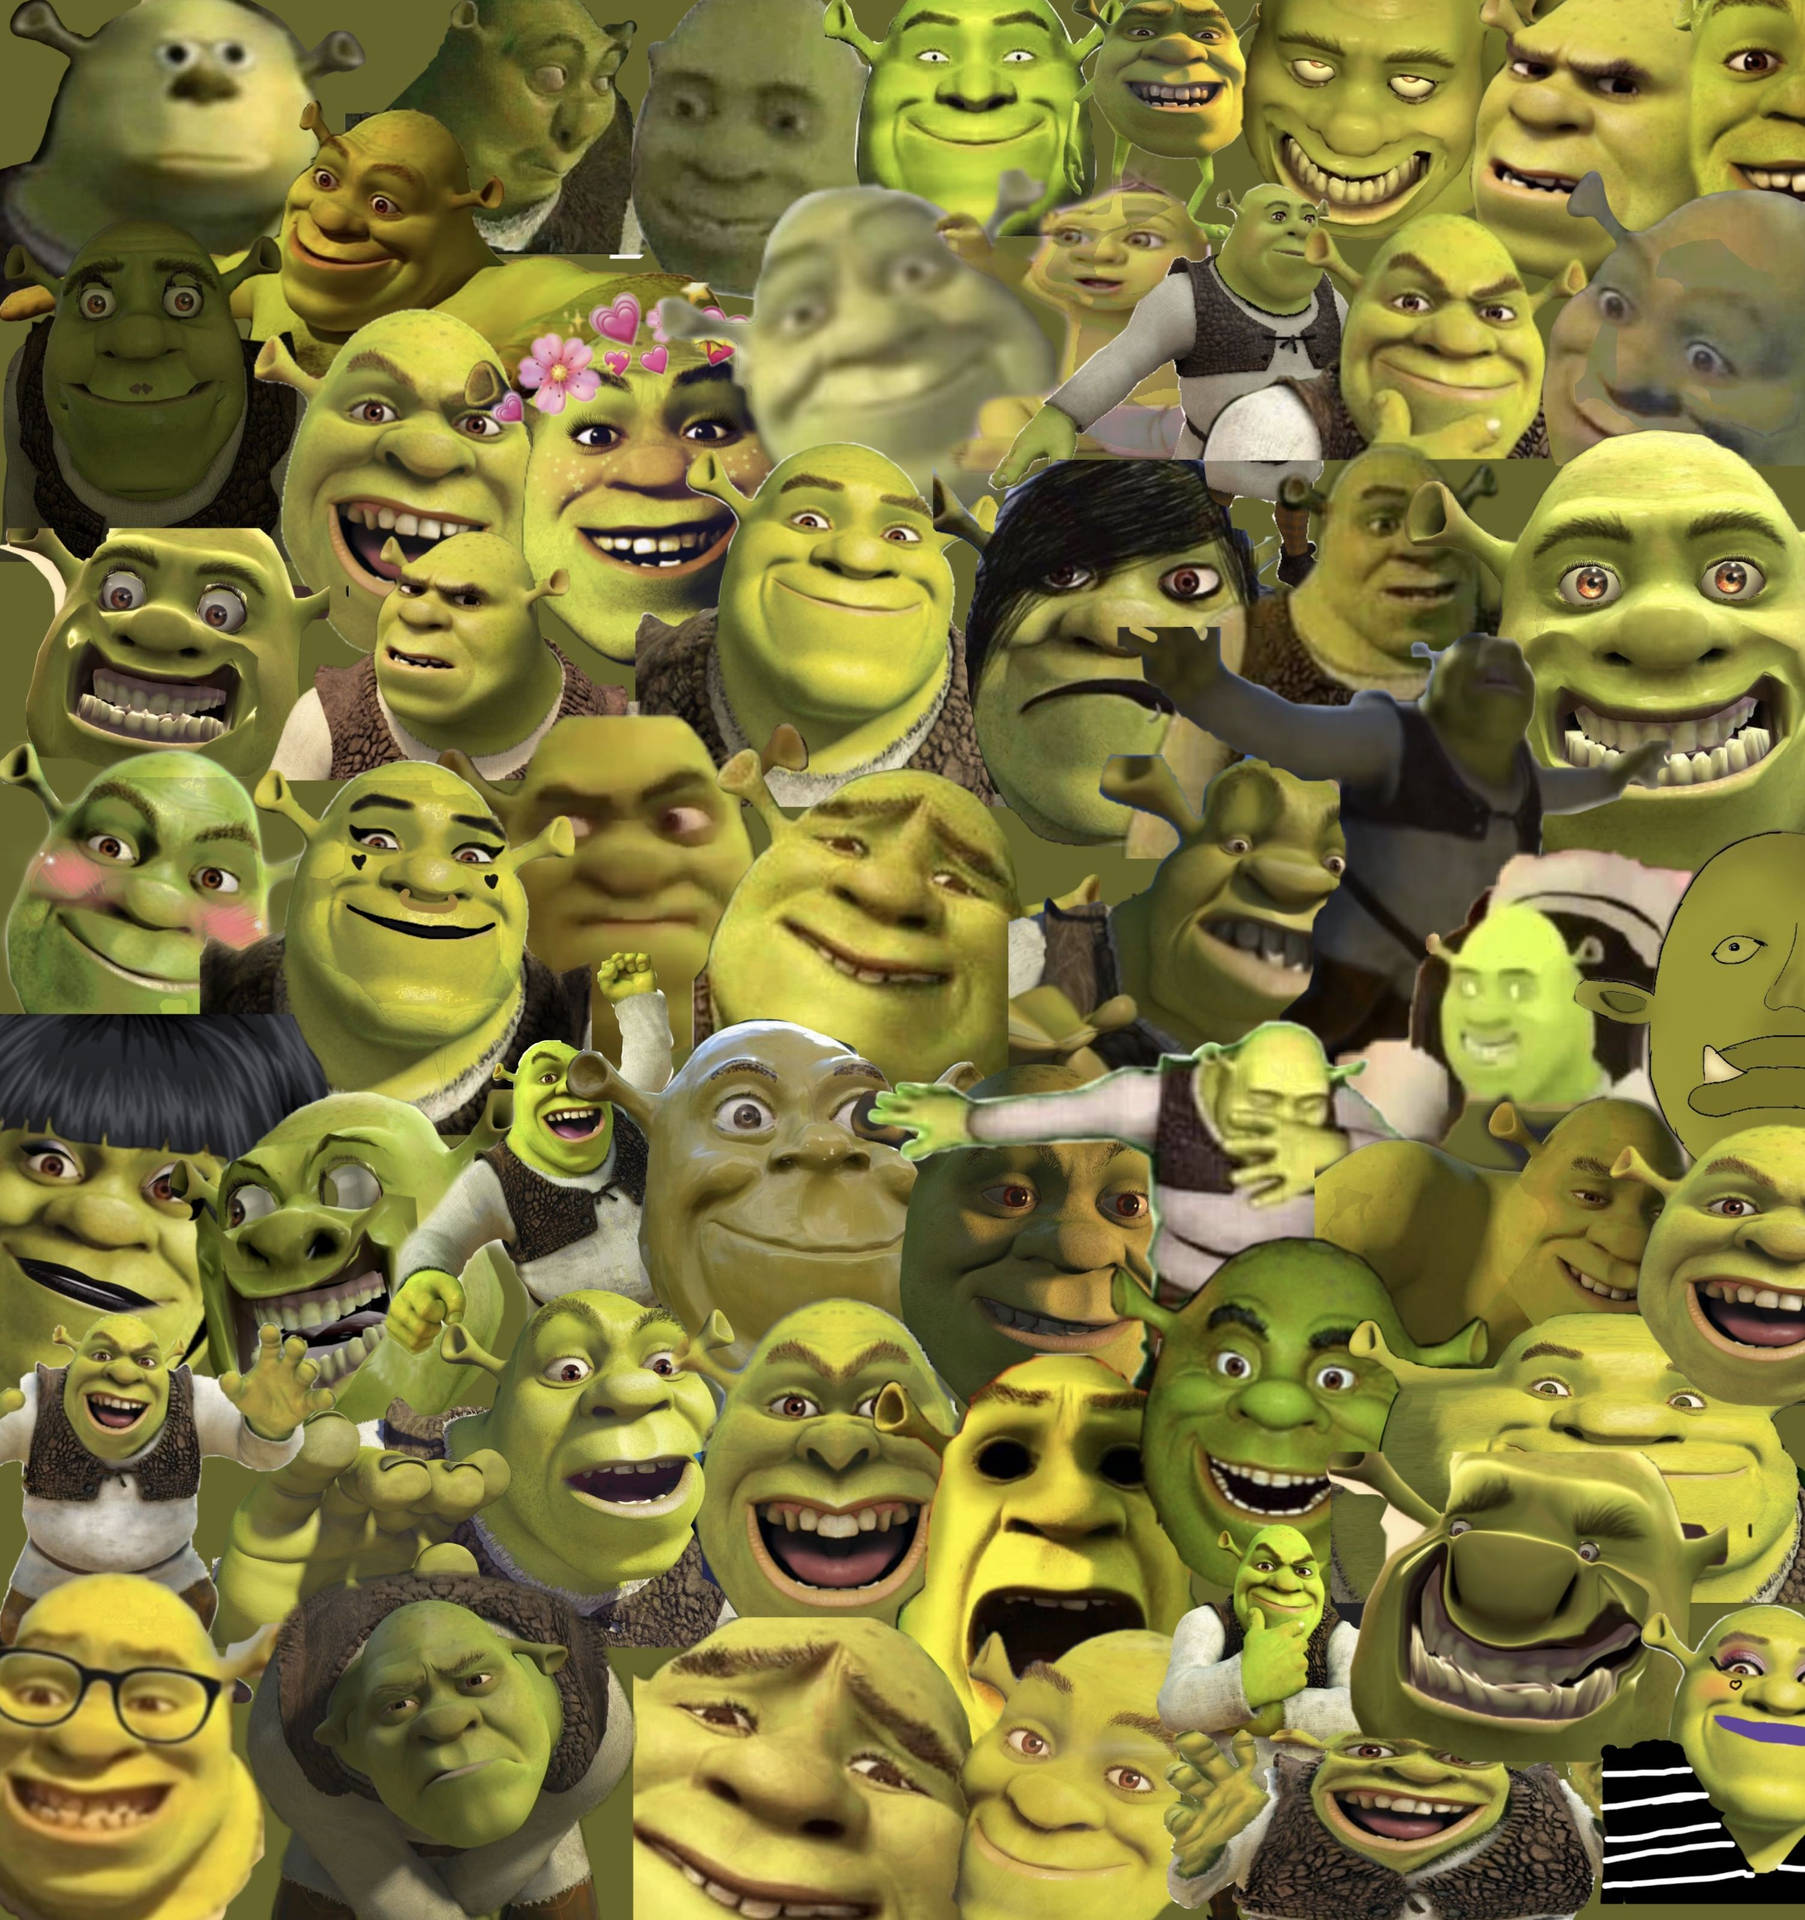 Shrek 3004X3195 Wallpaper and Background Image